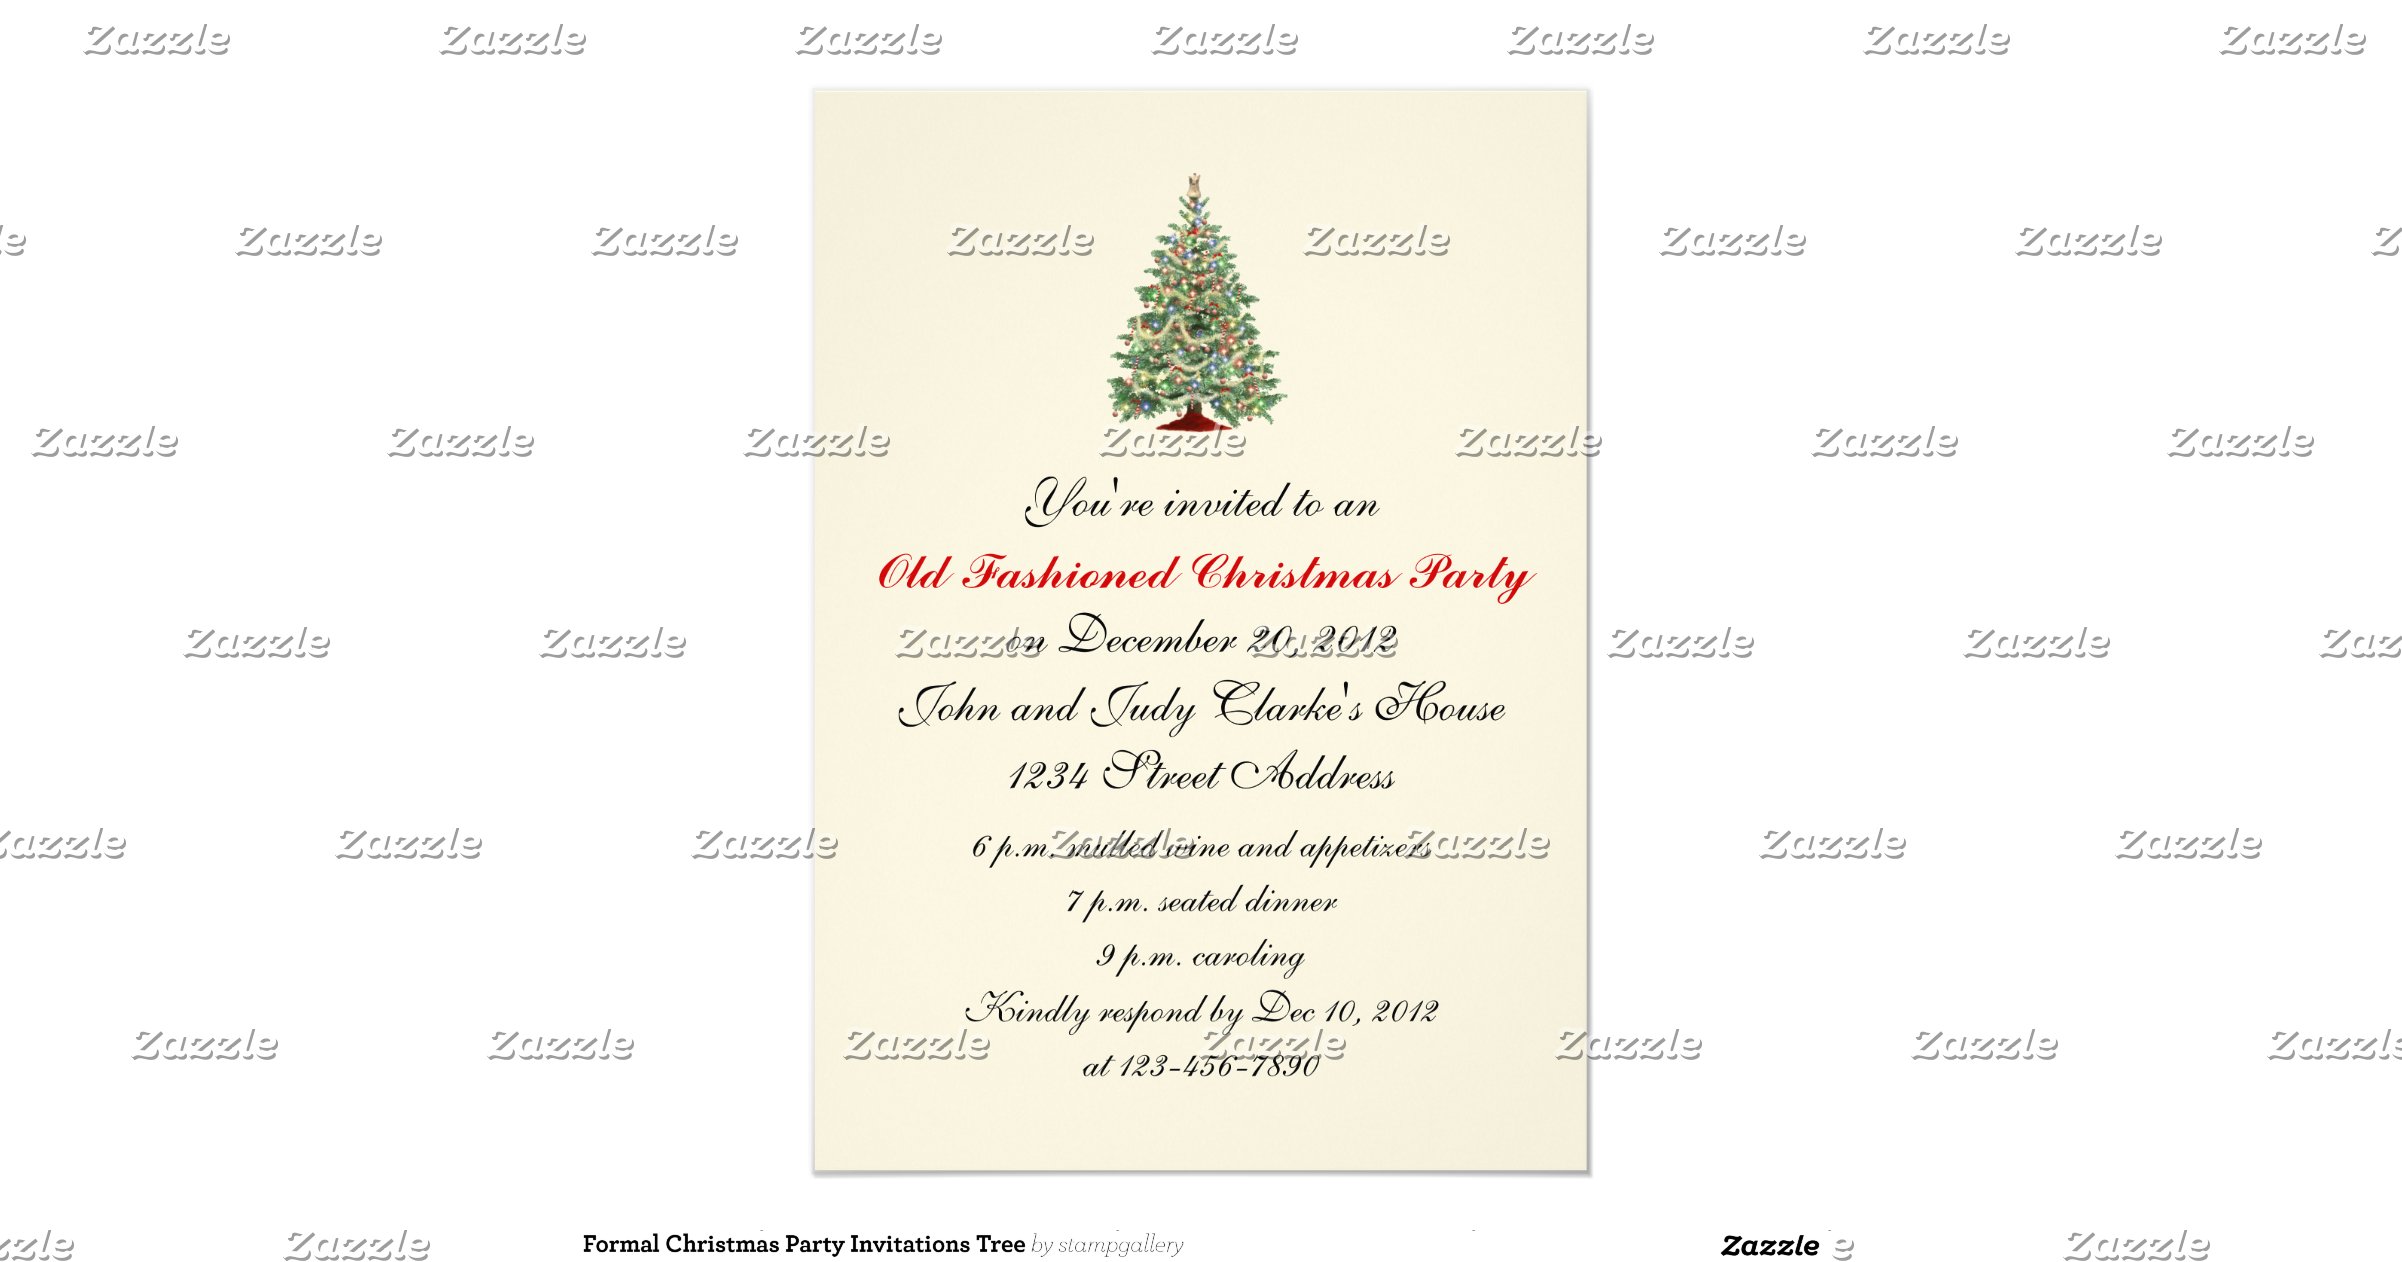 formal_christmas_party_invitations_tree